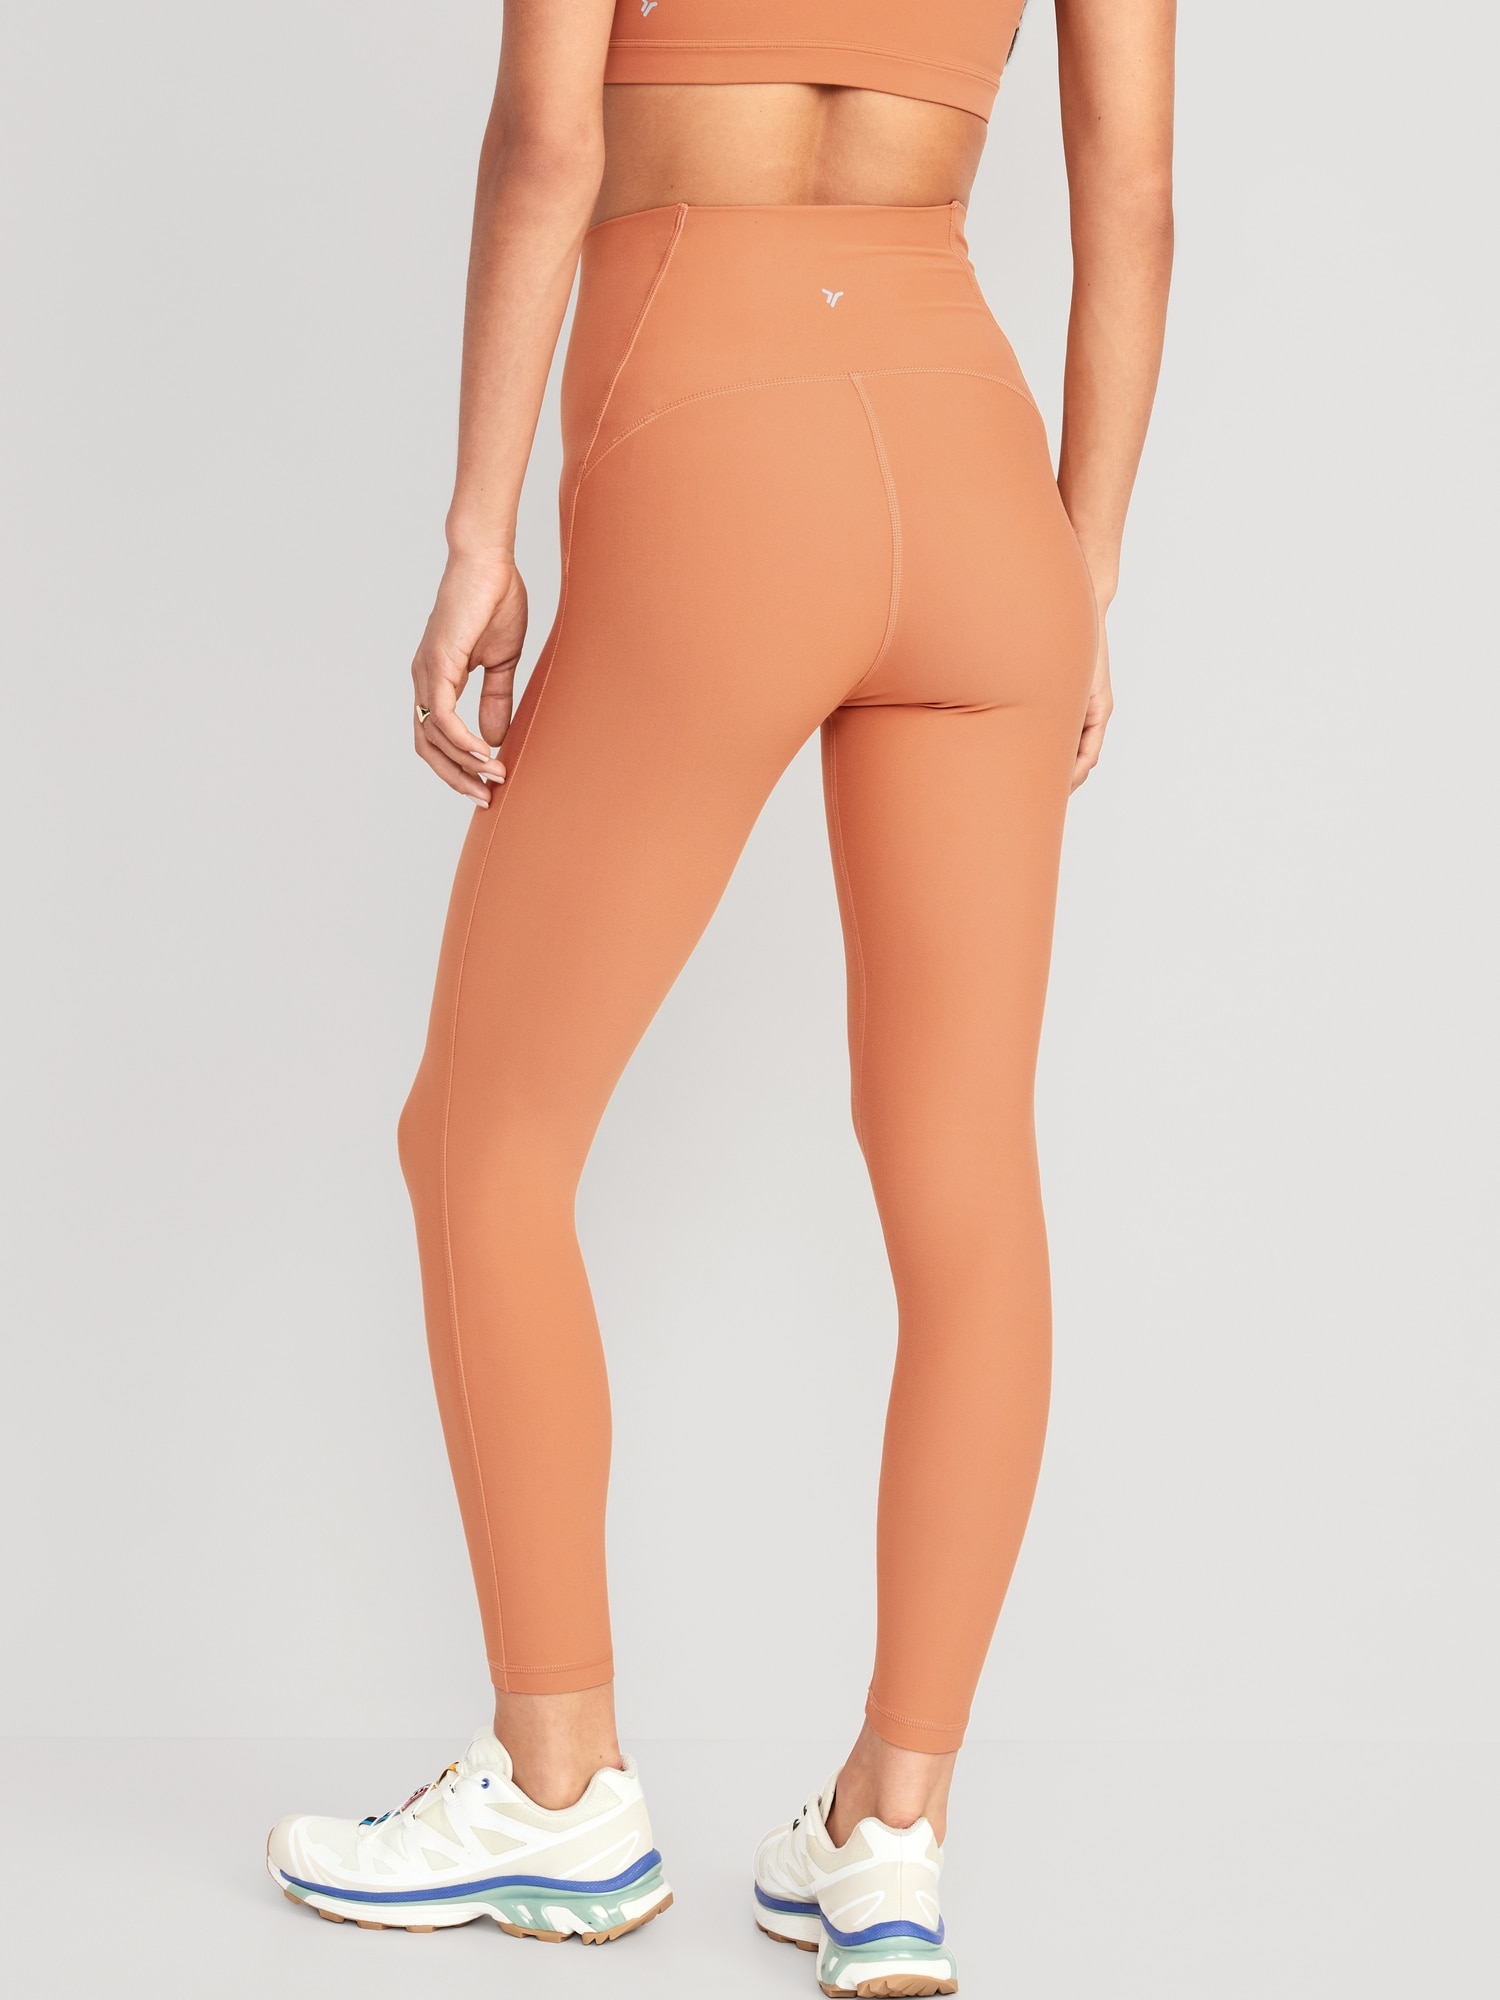 Lululemon high deep Orange leggings size 10